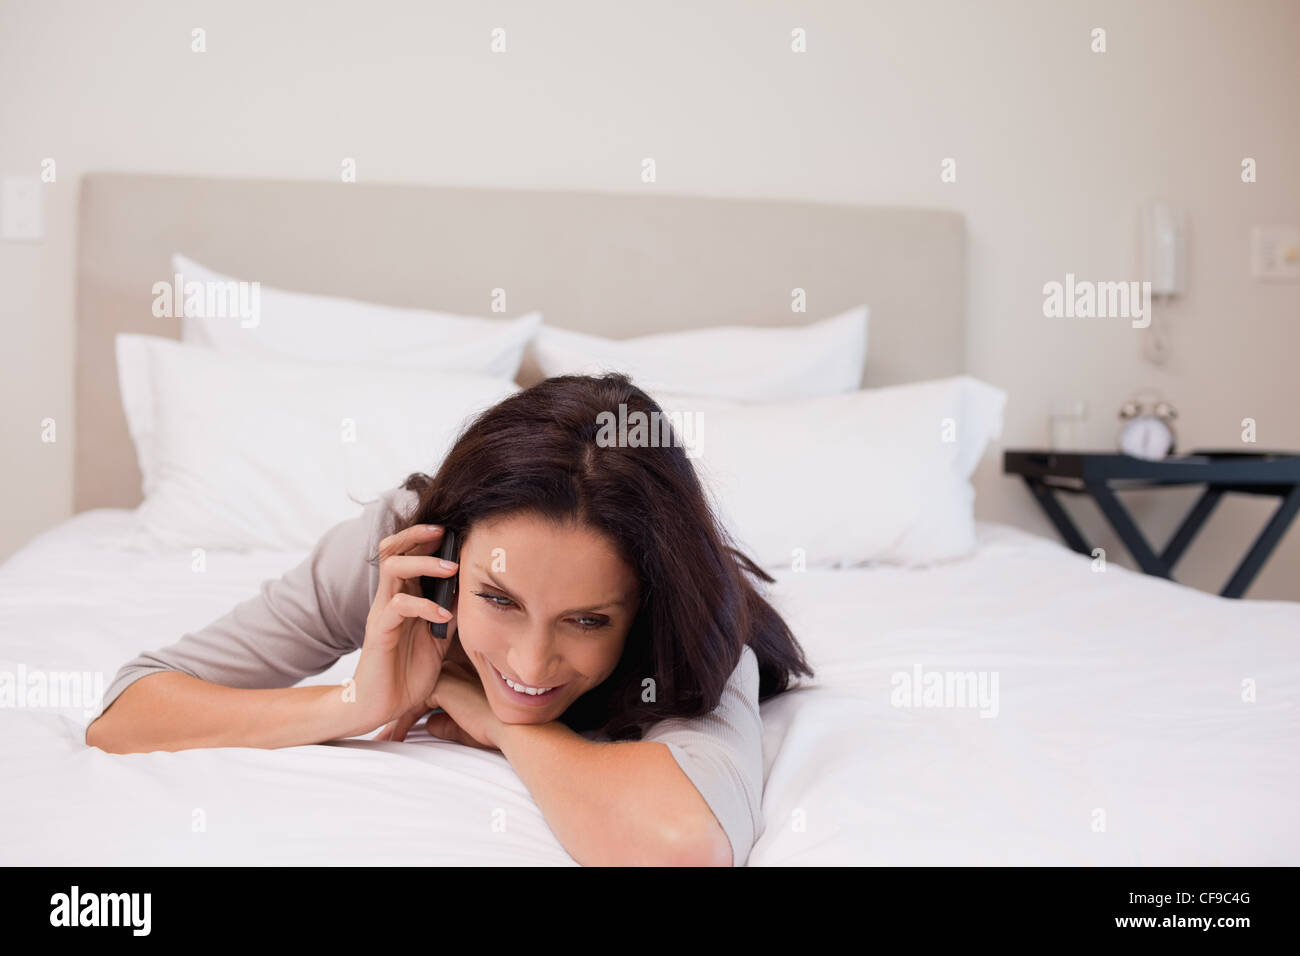 Woman having a joyful phone call on her bed Stock Photo